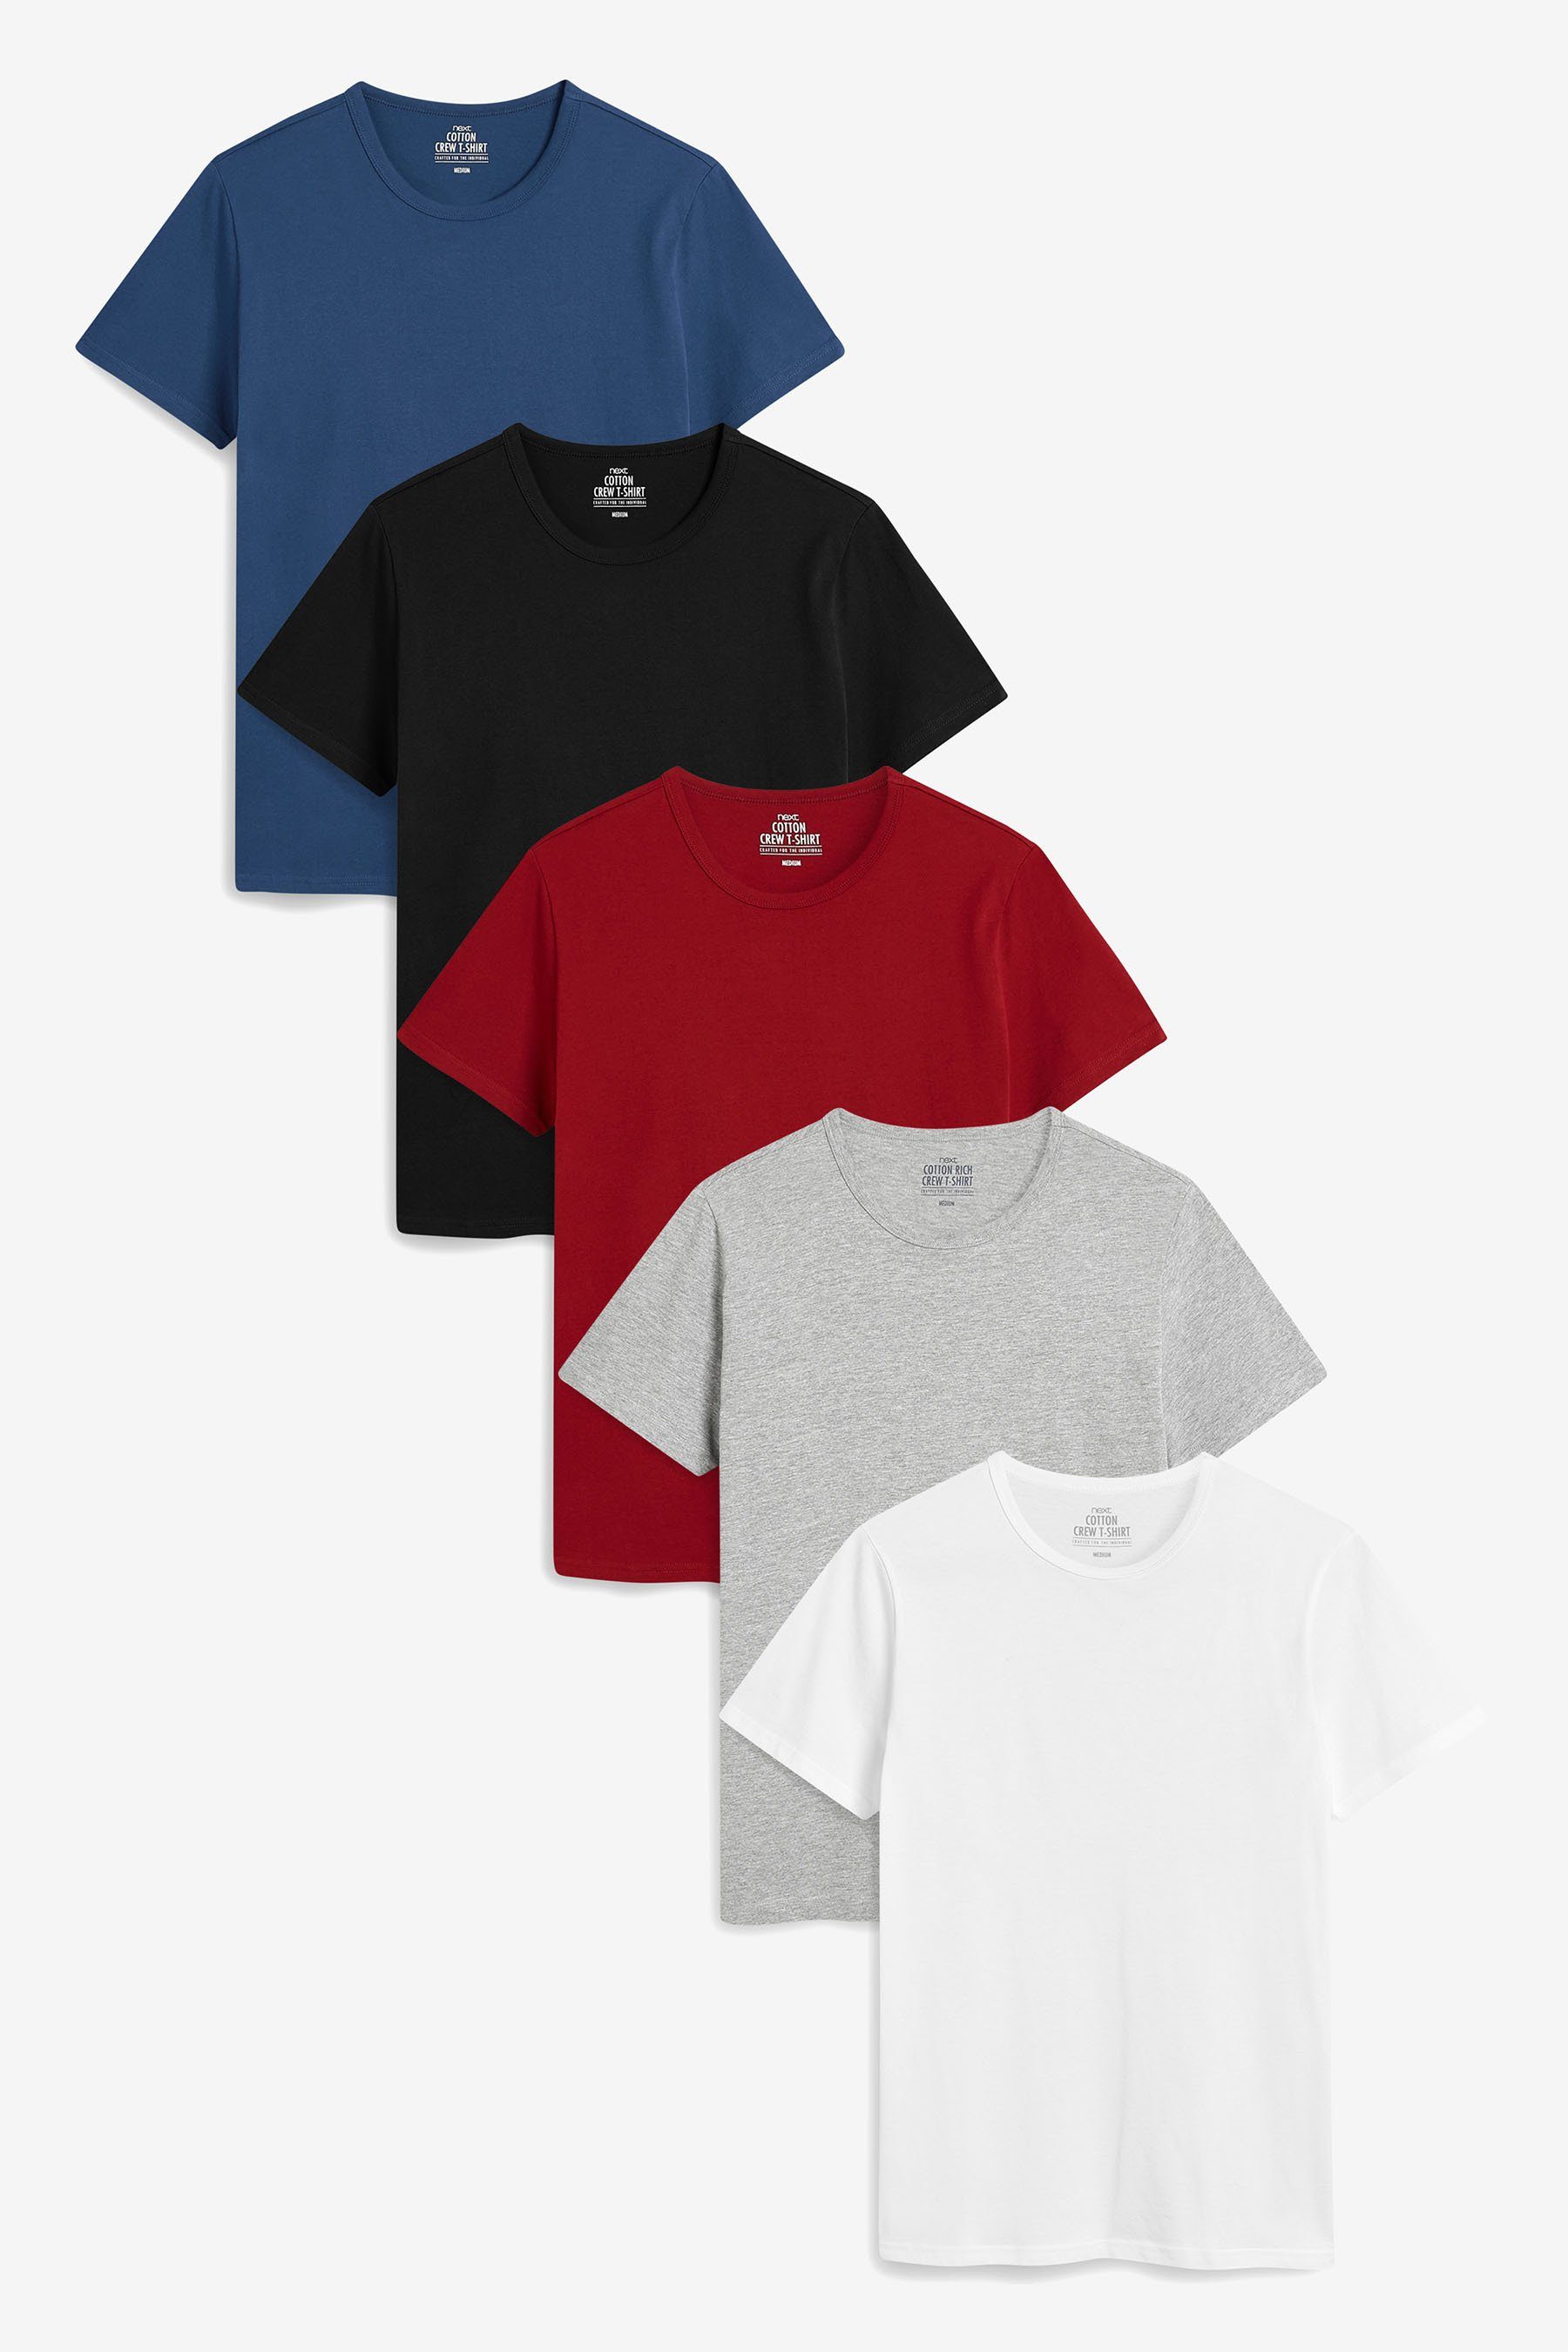 Next Unterhemd 5er-Pack T-Shirts (5-St) Burgundy Red/Black/White/Blue/Grey Marl